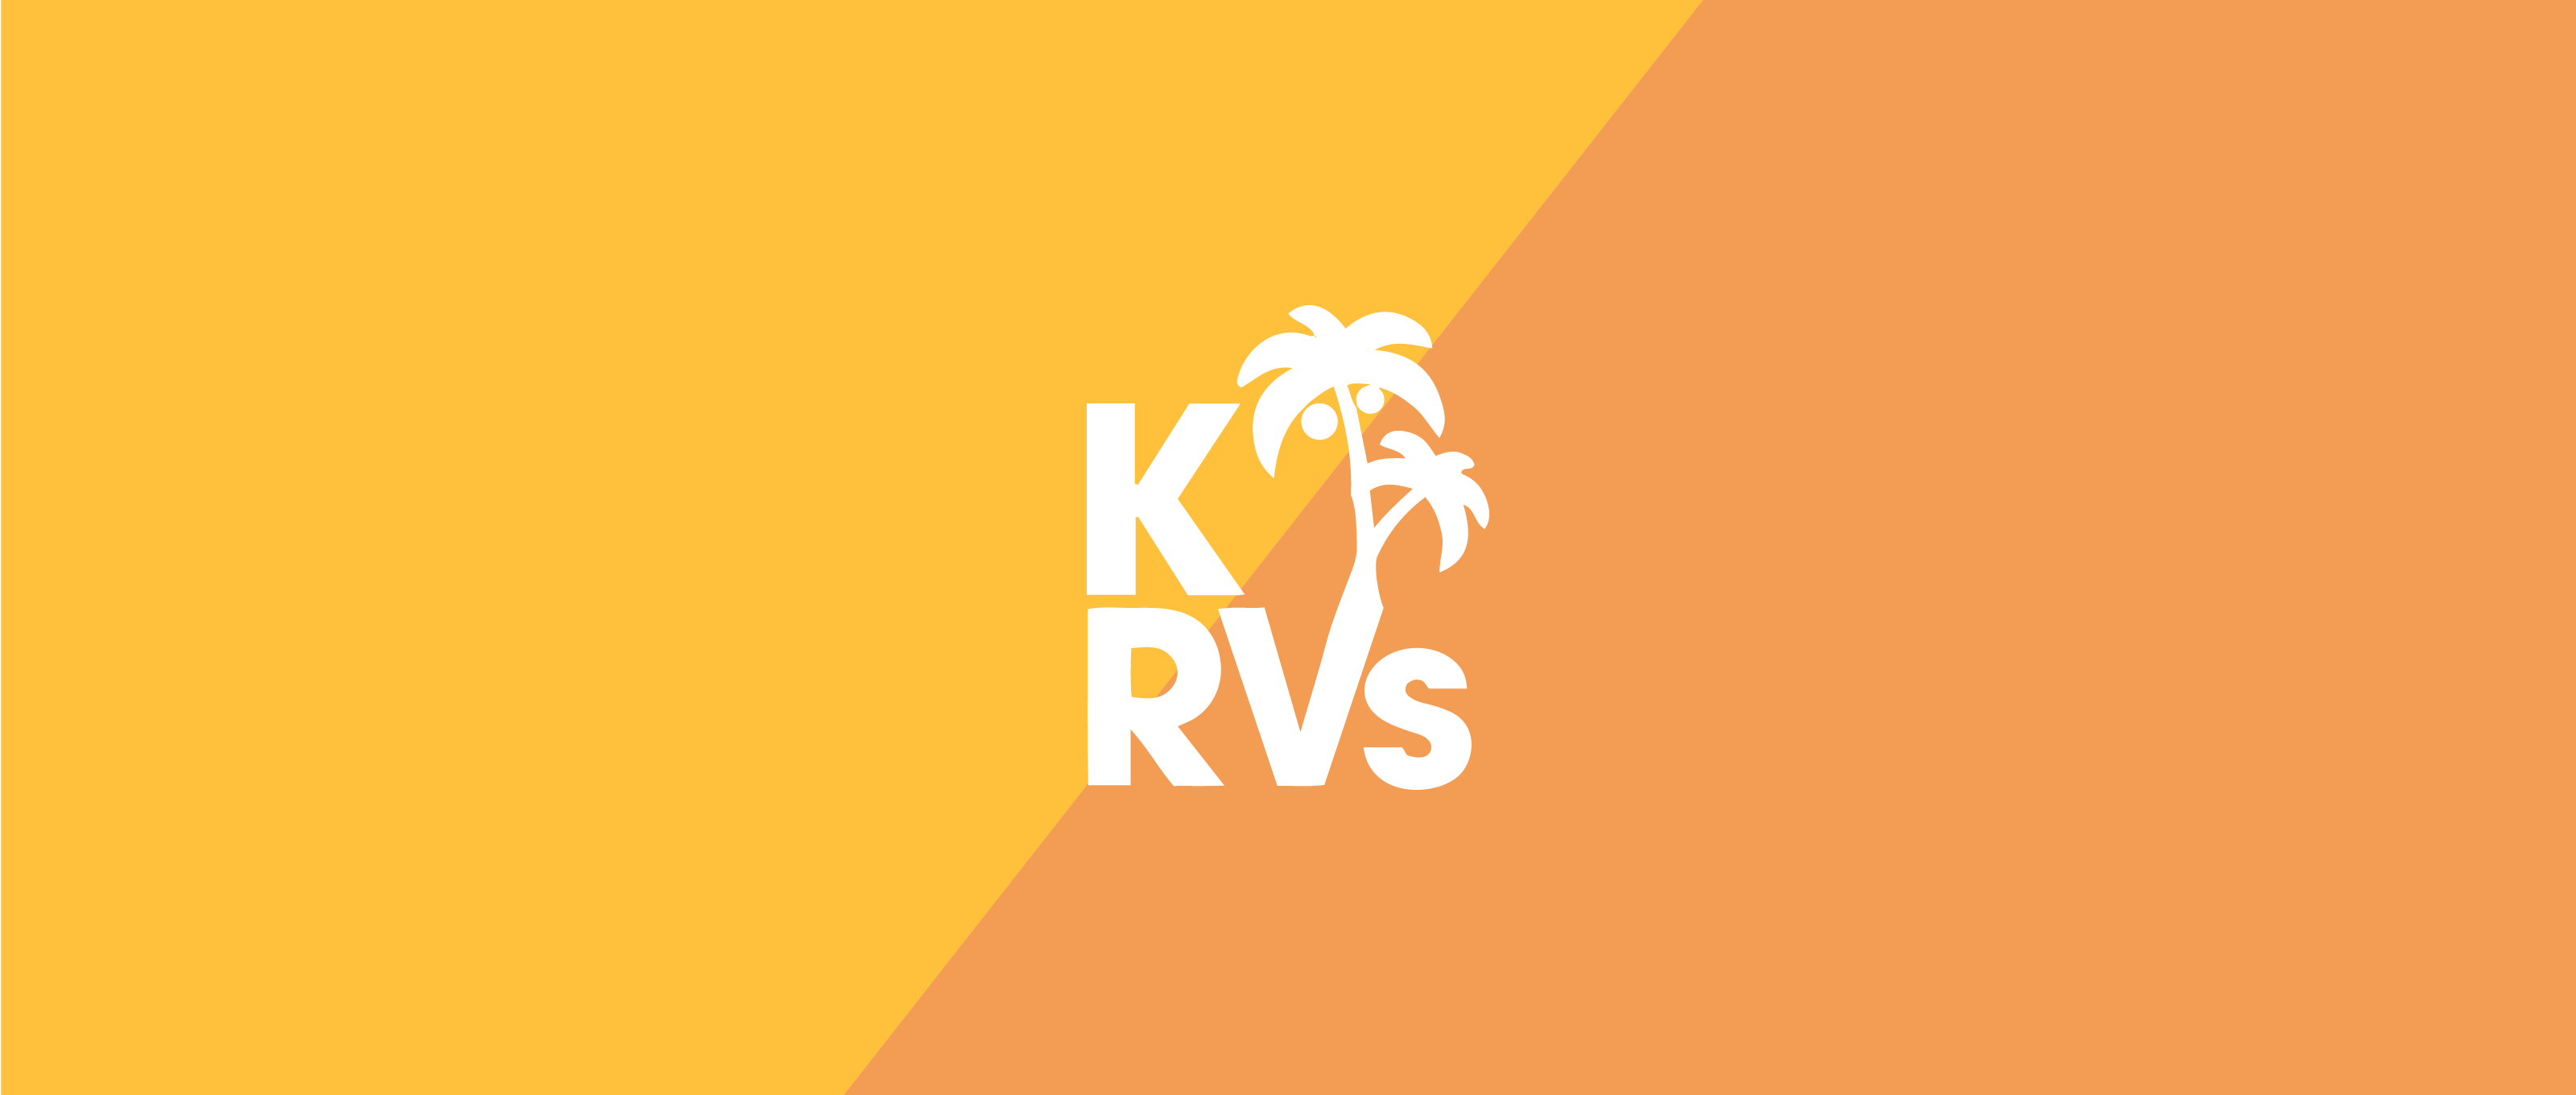 Kelowna RVs Case Study